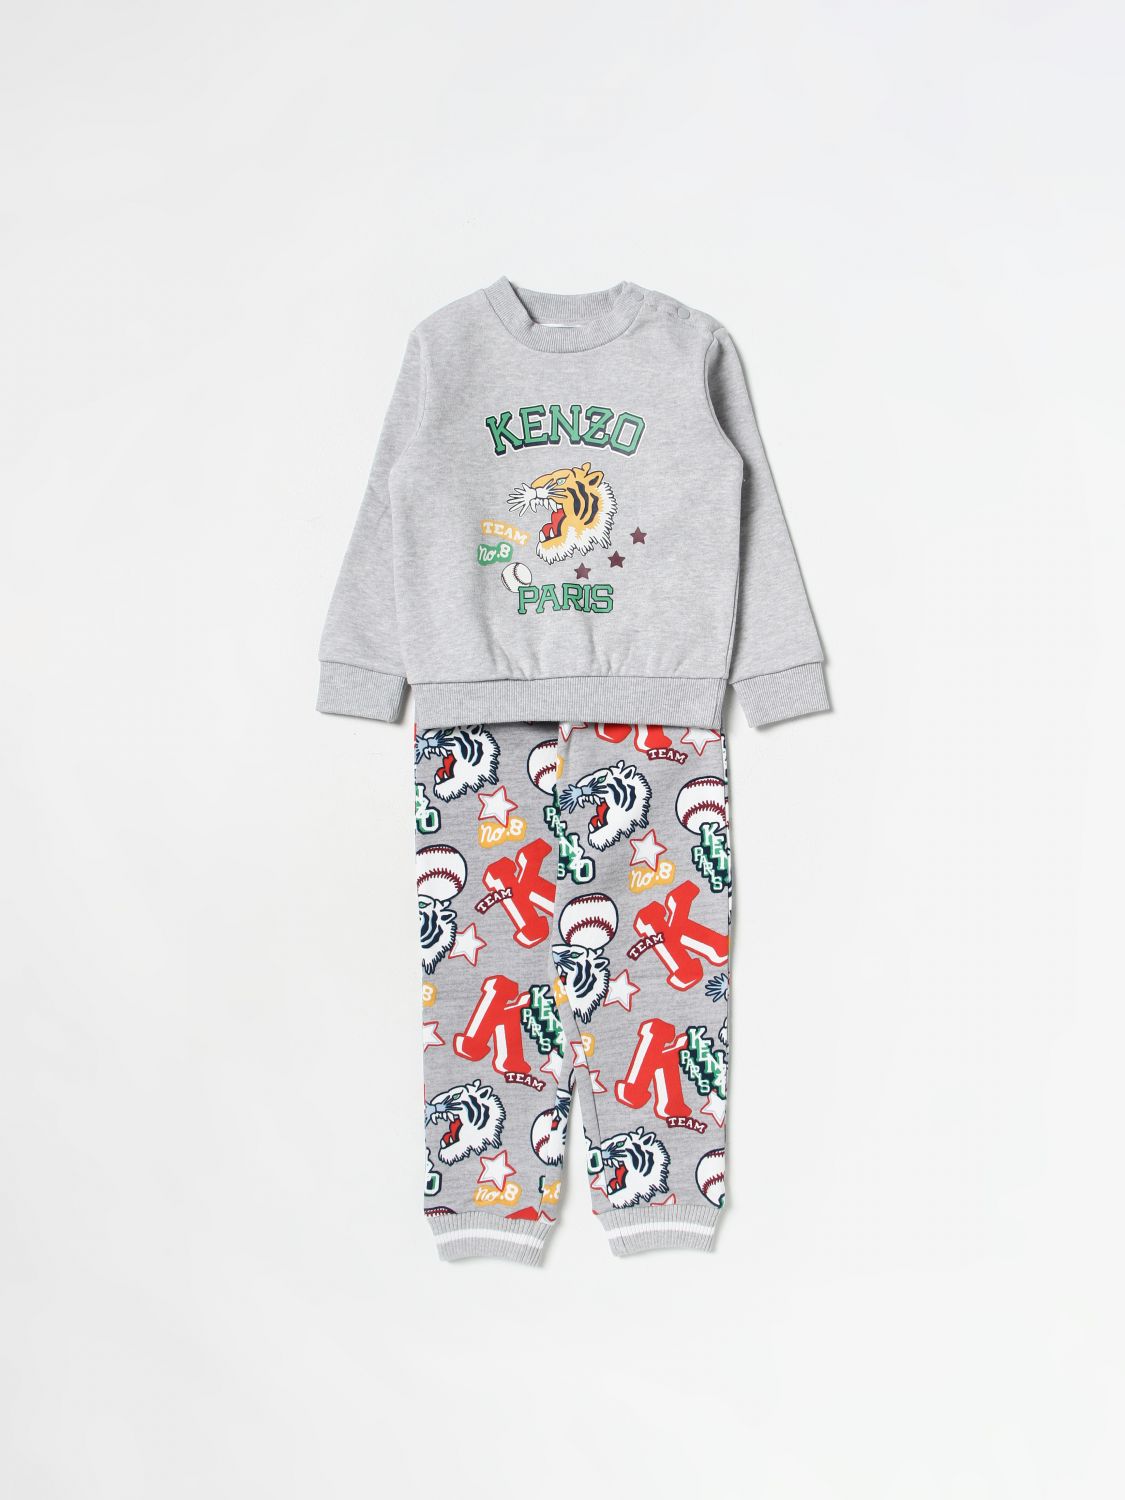 Kenzo Babies' Romper  Kids Kids Color Grey